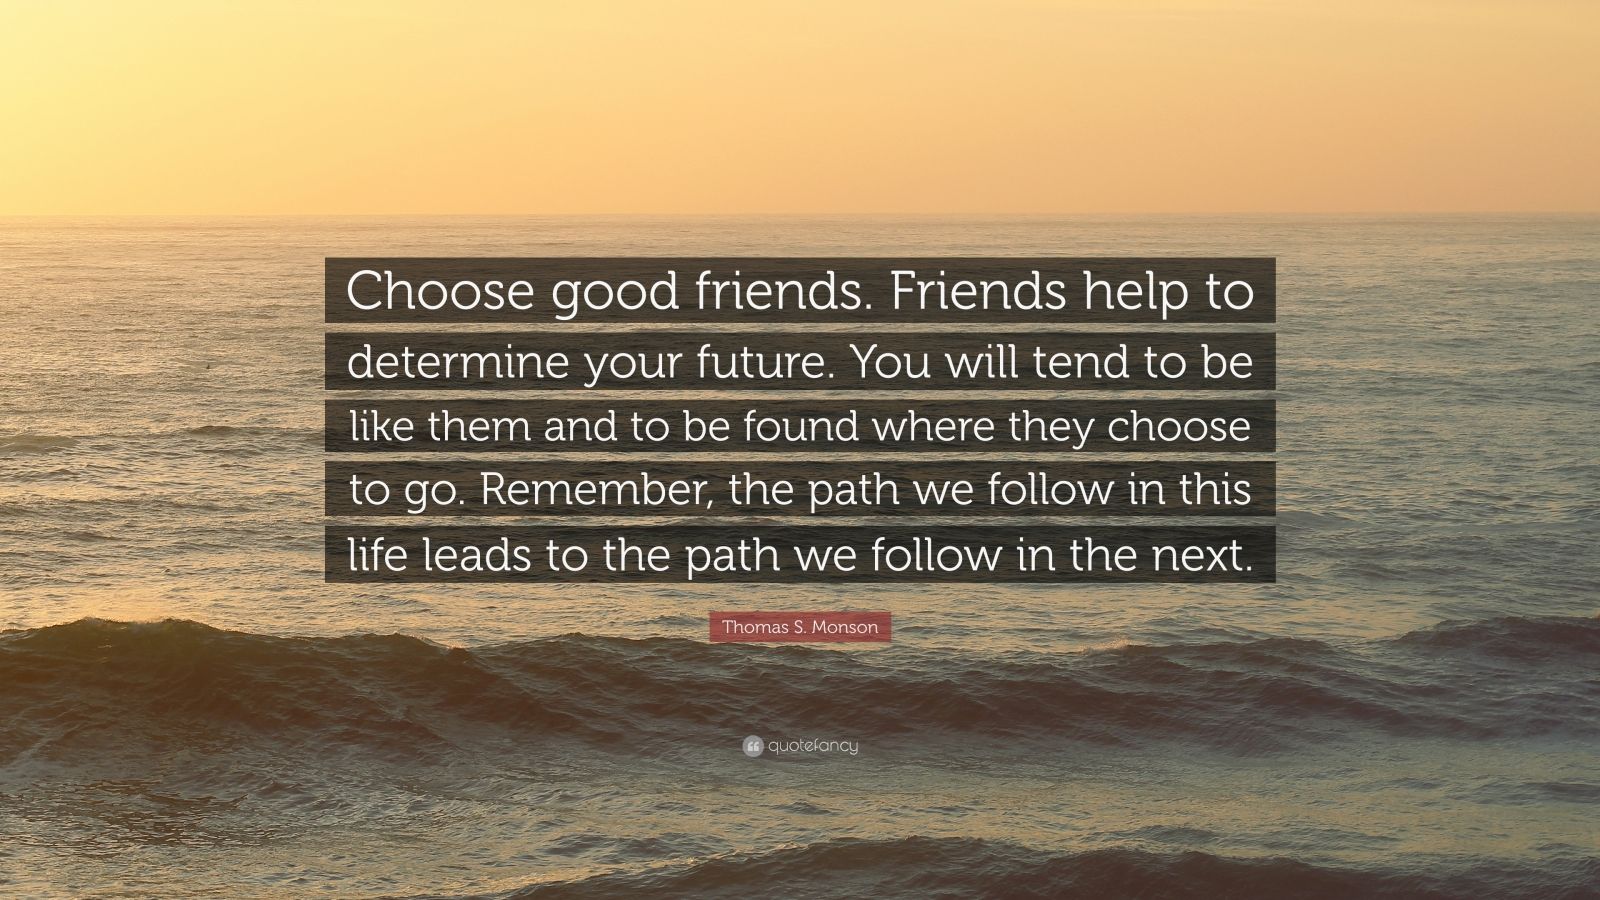 Advice to a friend on choosing